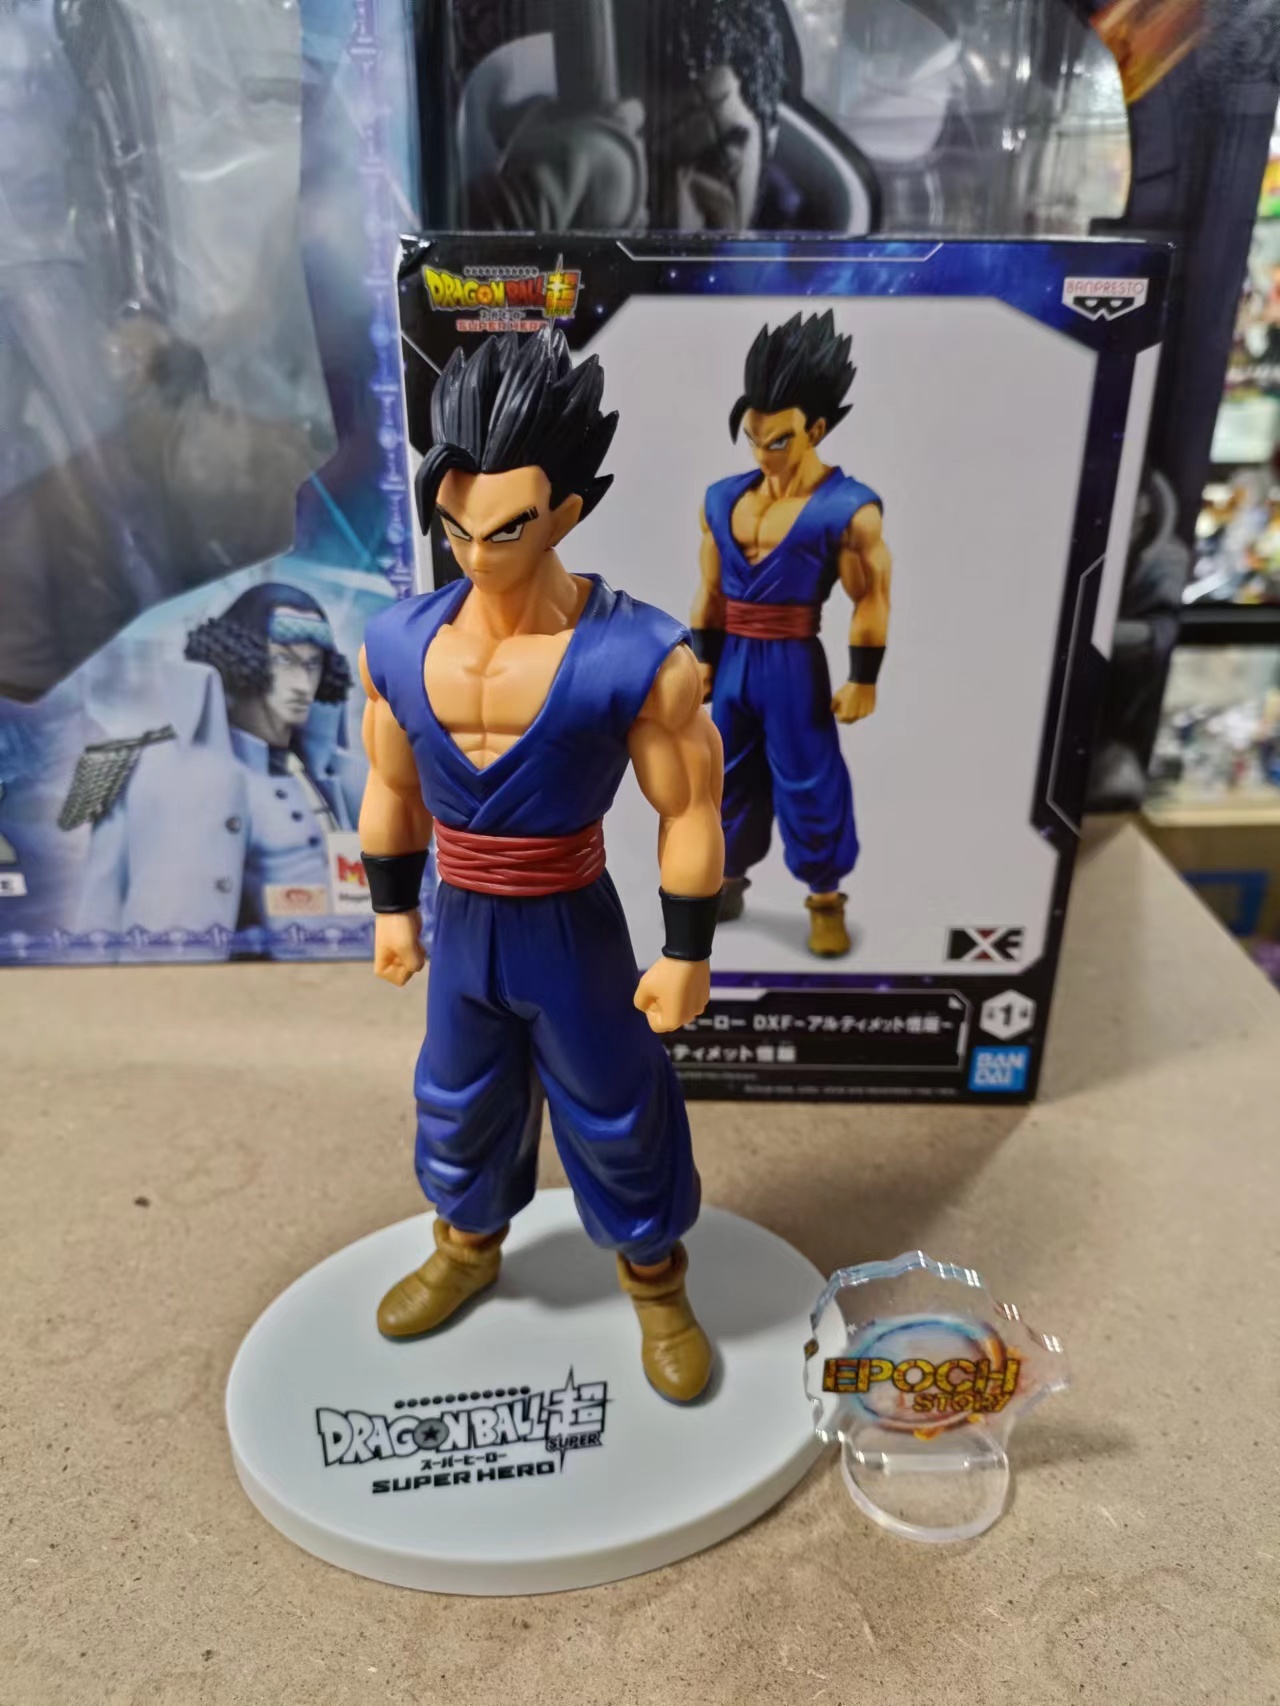 Banpresto DXF Dragon Ball Super Super Hero Ultimate Gohan Figure blue